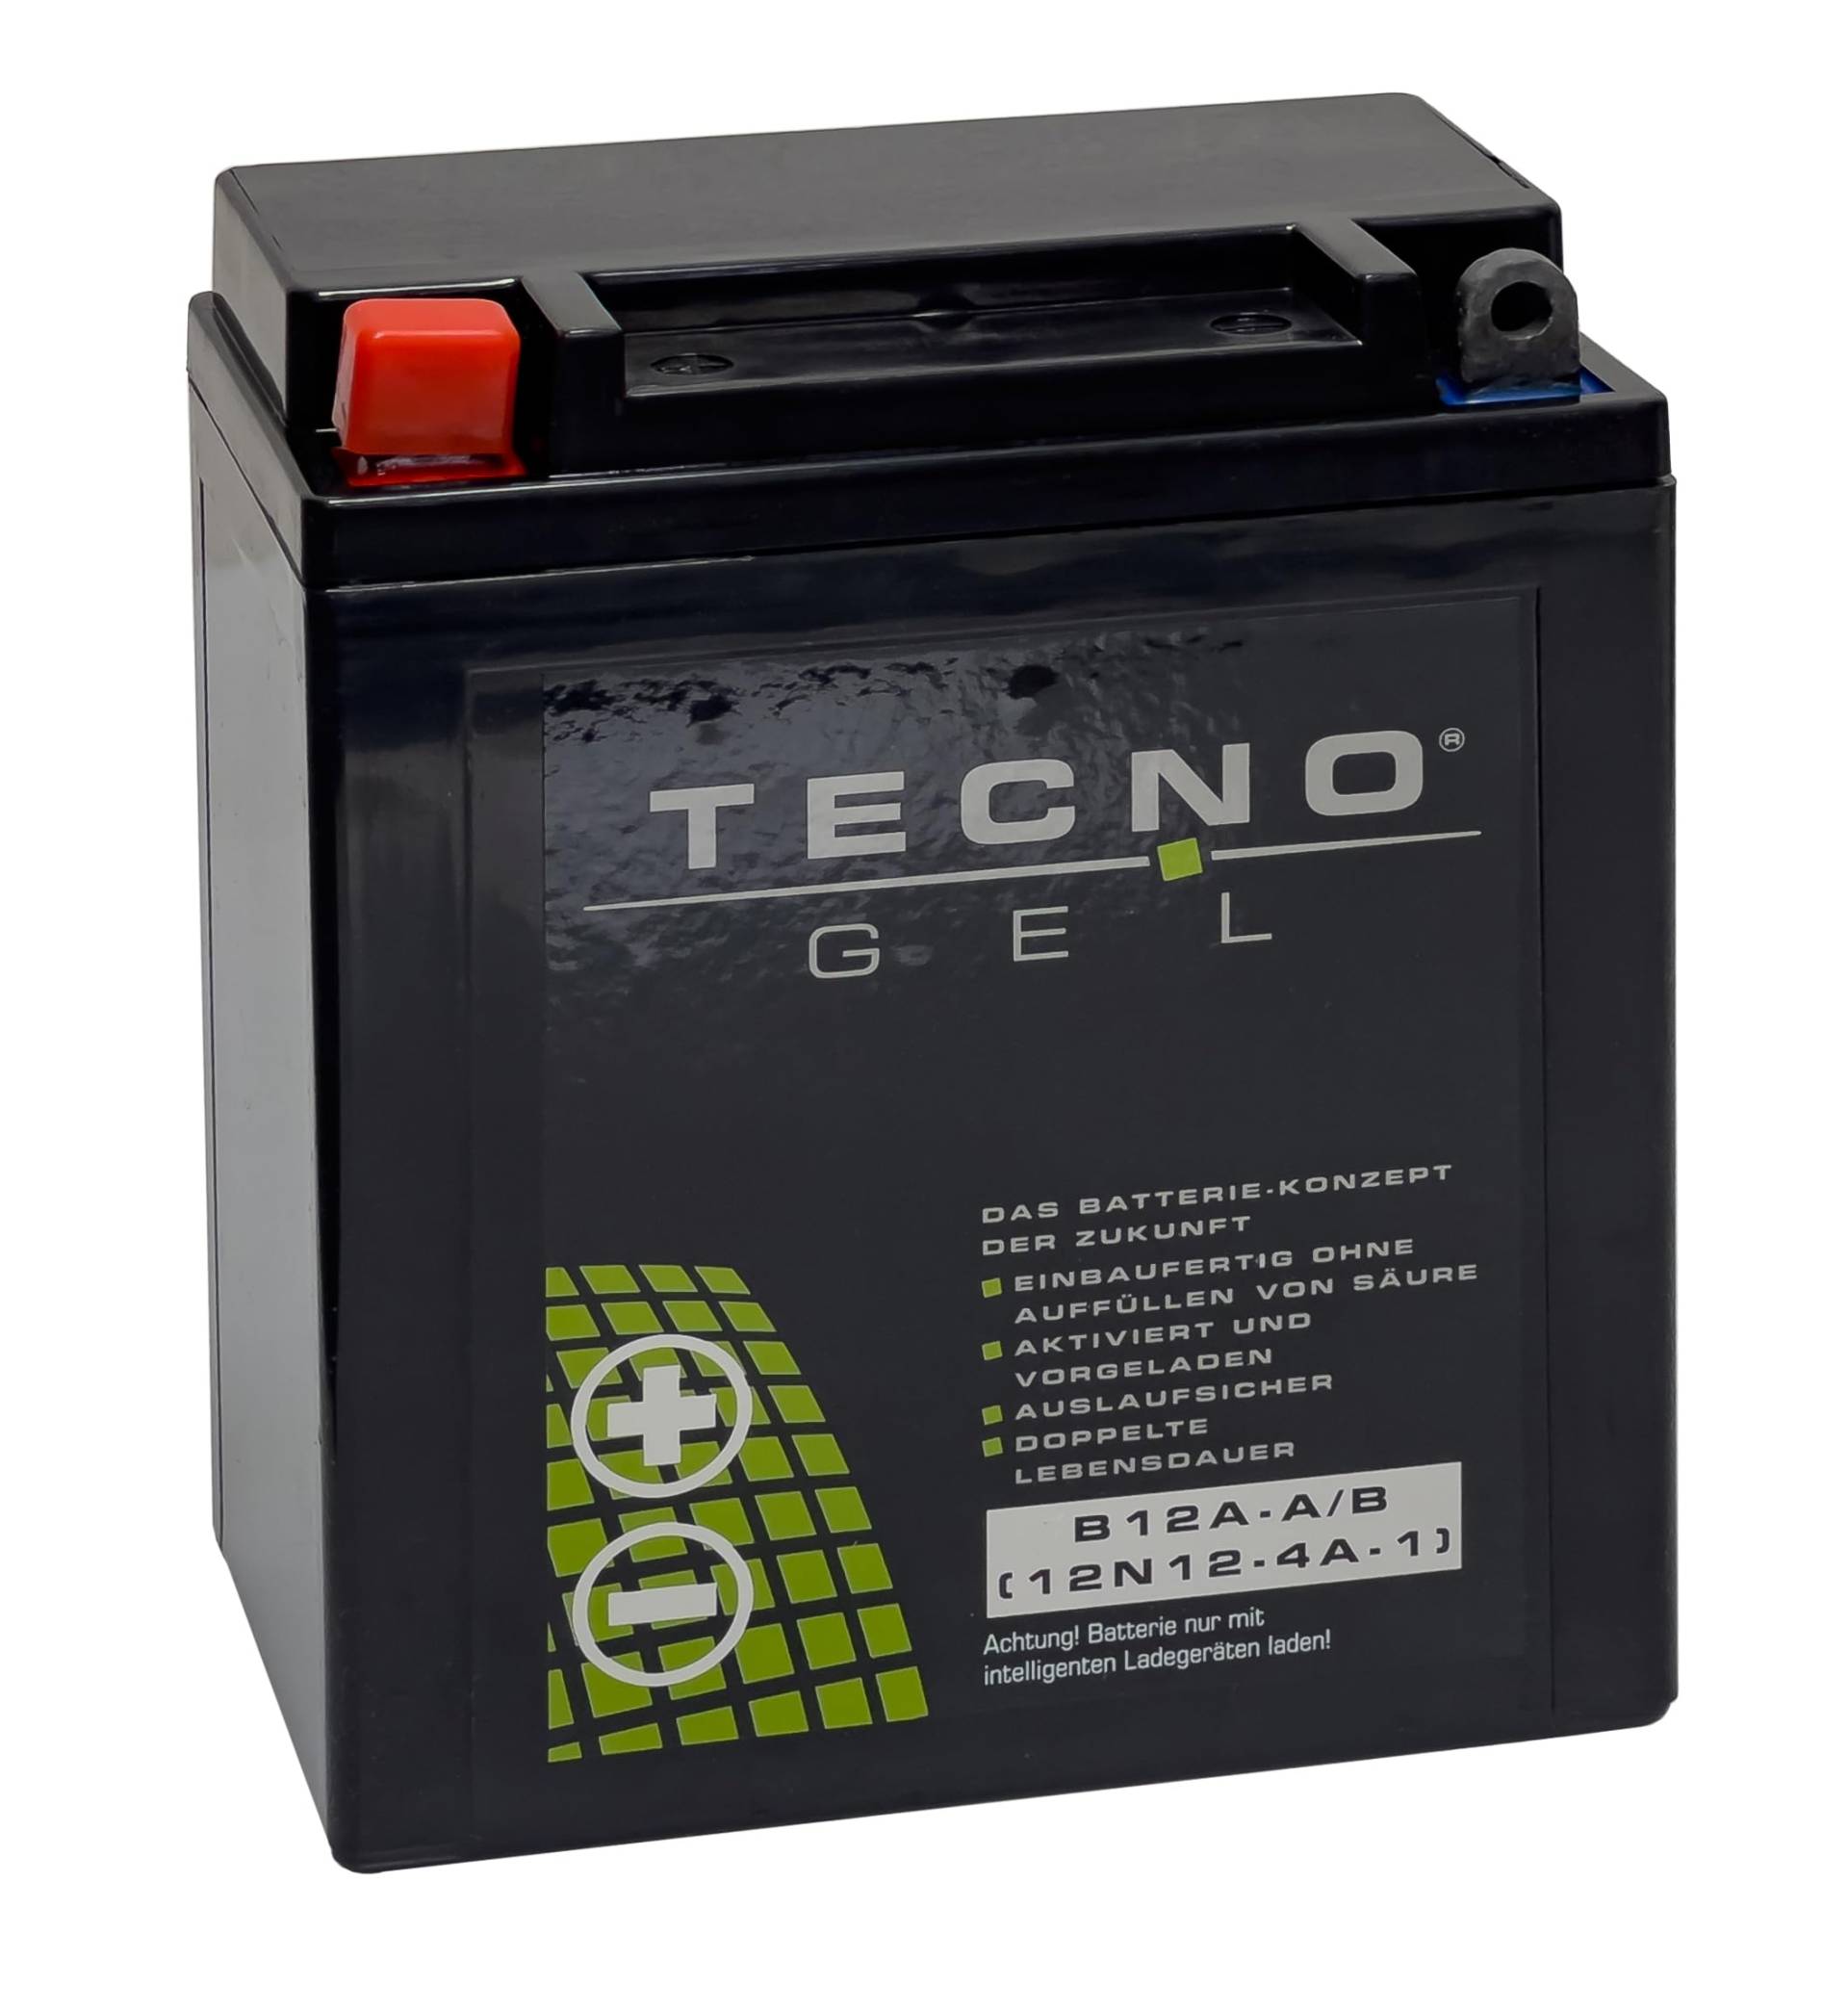 TECNO-GEL Qualitäts Motorrad-Batterie für YB12A-A/B = 12N12A-4A-1, 12V Gel-Batterie 12Ah (DIN 51211, 51215), 134x80x161 mm von Wirth-Federn